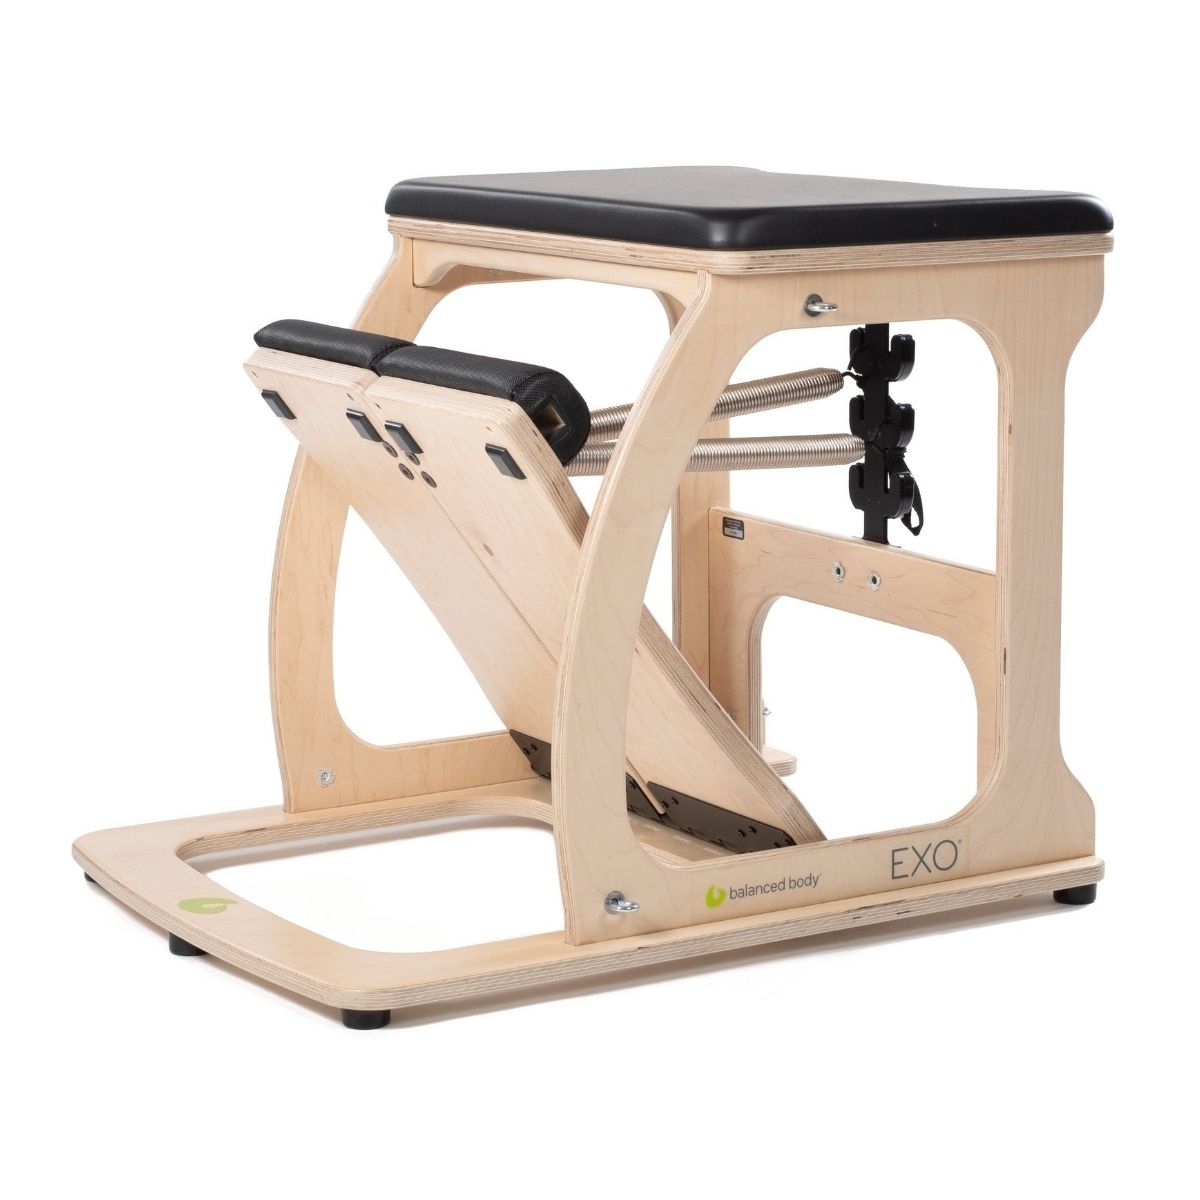 Pilates Exo Chair Balanced Body 